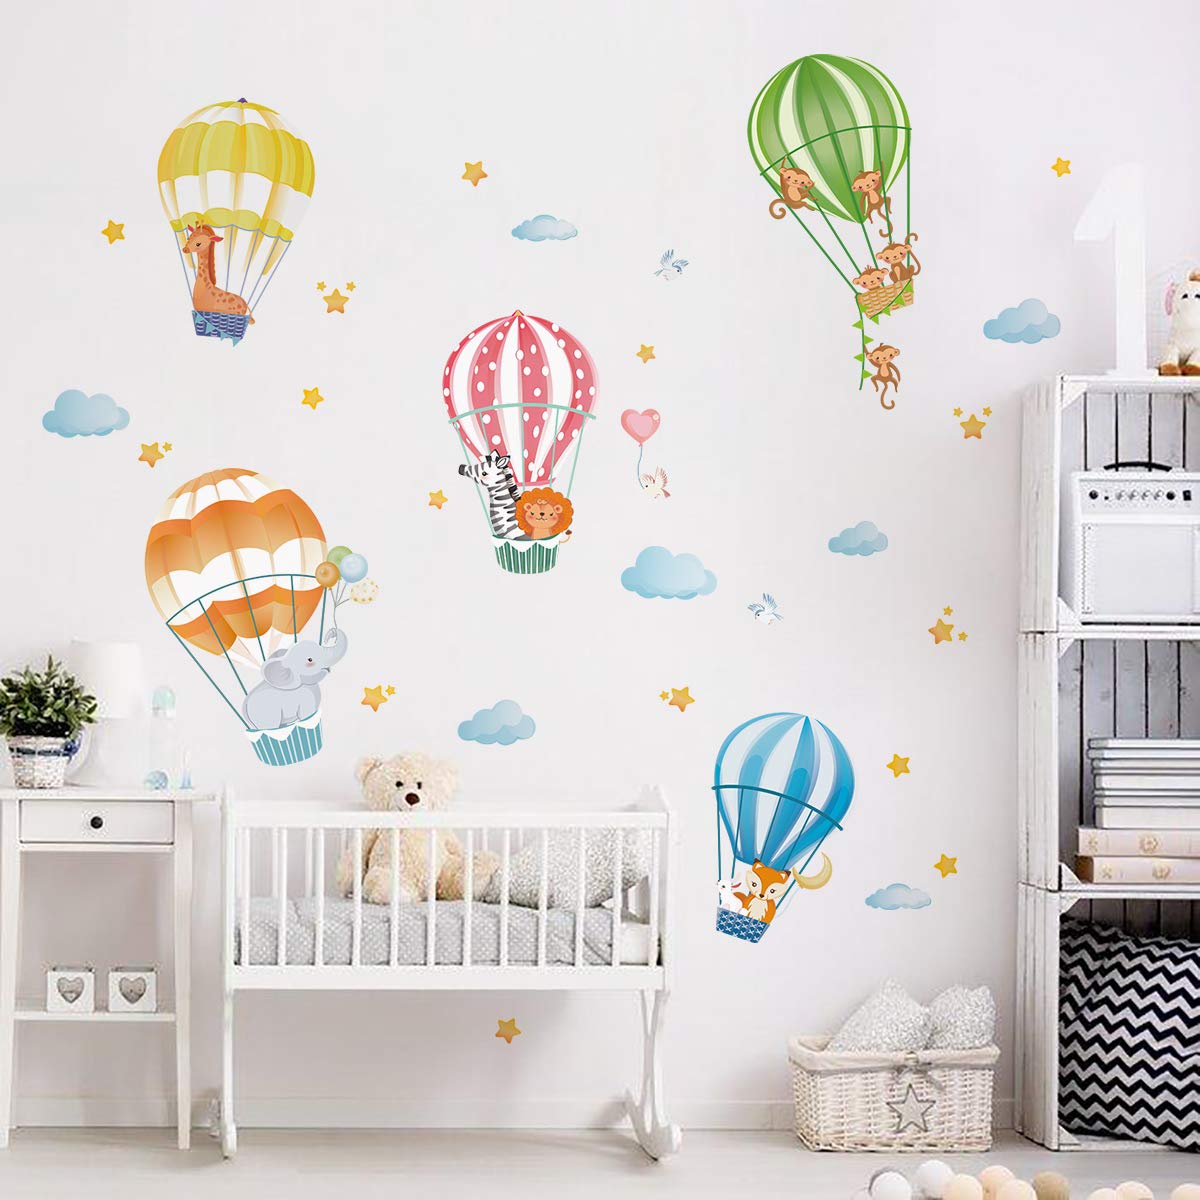 decalmile Animals in Hot Air Balloons Wall Decals Elephant Giraffe Monkey Wall Stickers Baby Nursery Kids Bedroom Playroom Wall Decor